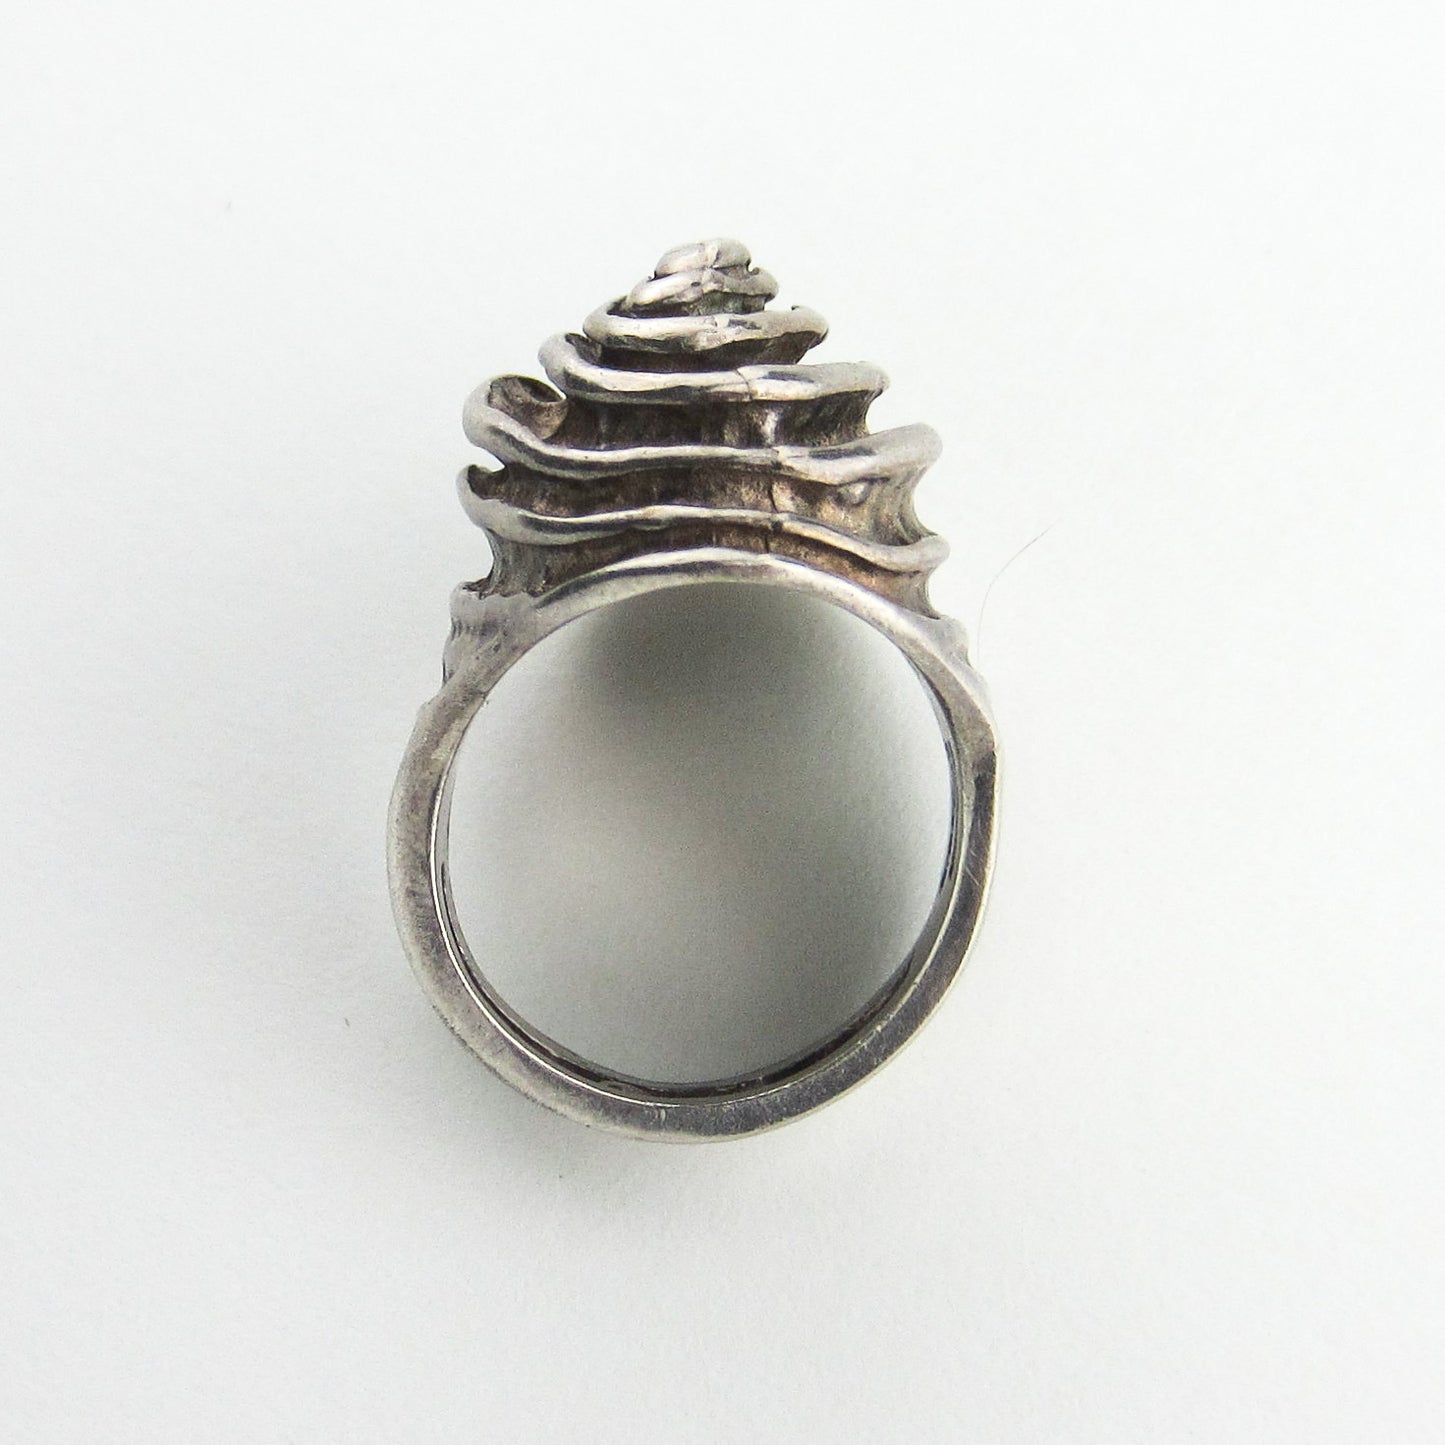 SOLD--Modernist Ridged Cone Ring Sterling Silver, Pauline Rader c. 1960